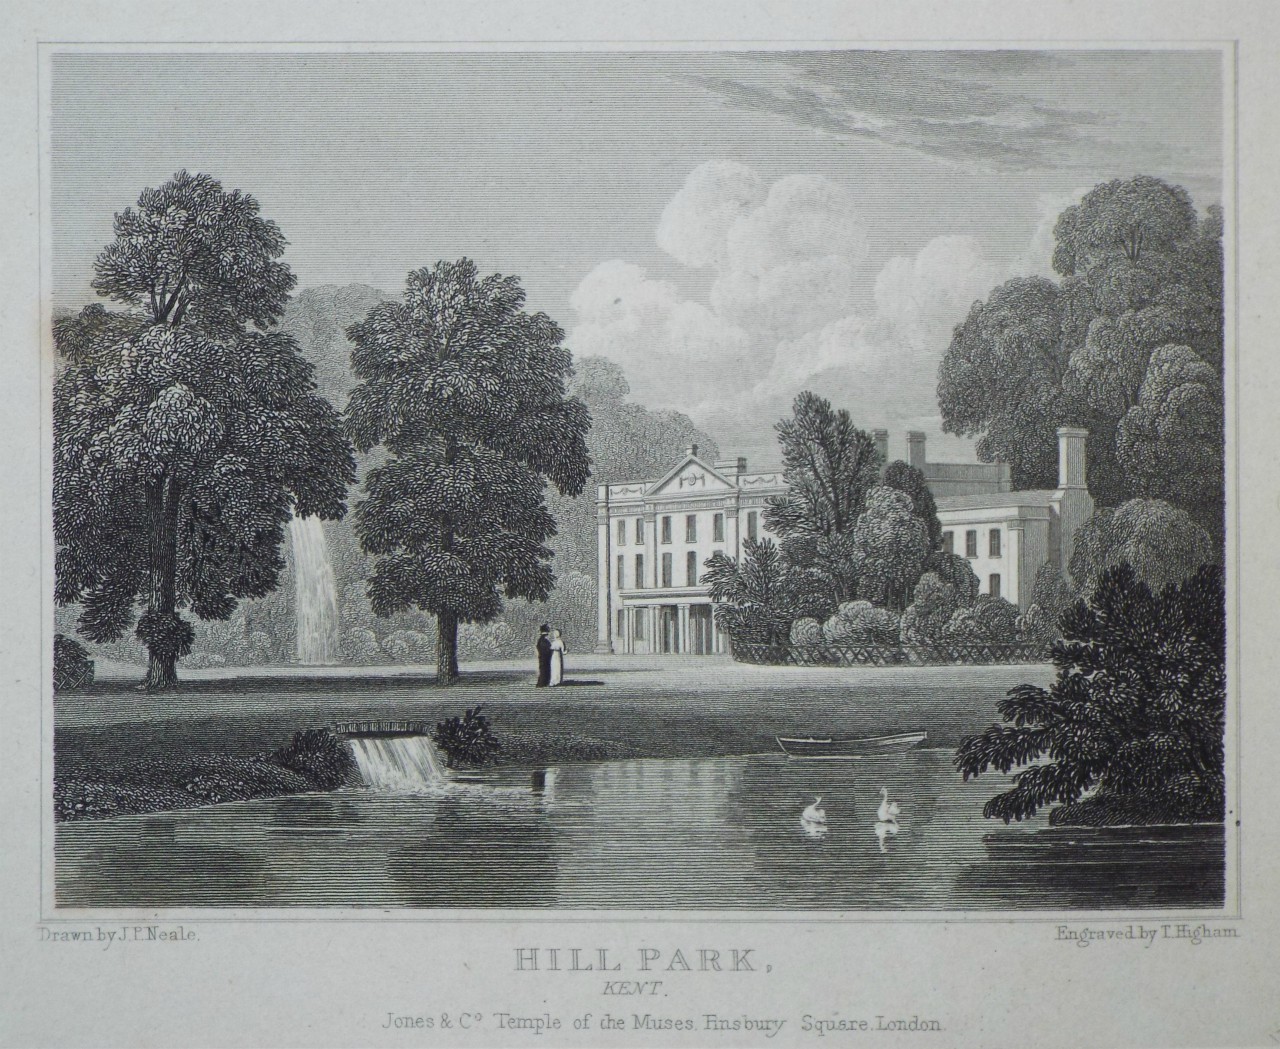 Print - Hill Park, Kent. - Higham